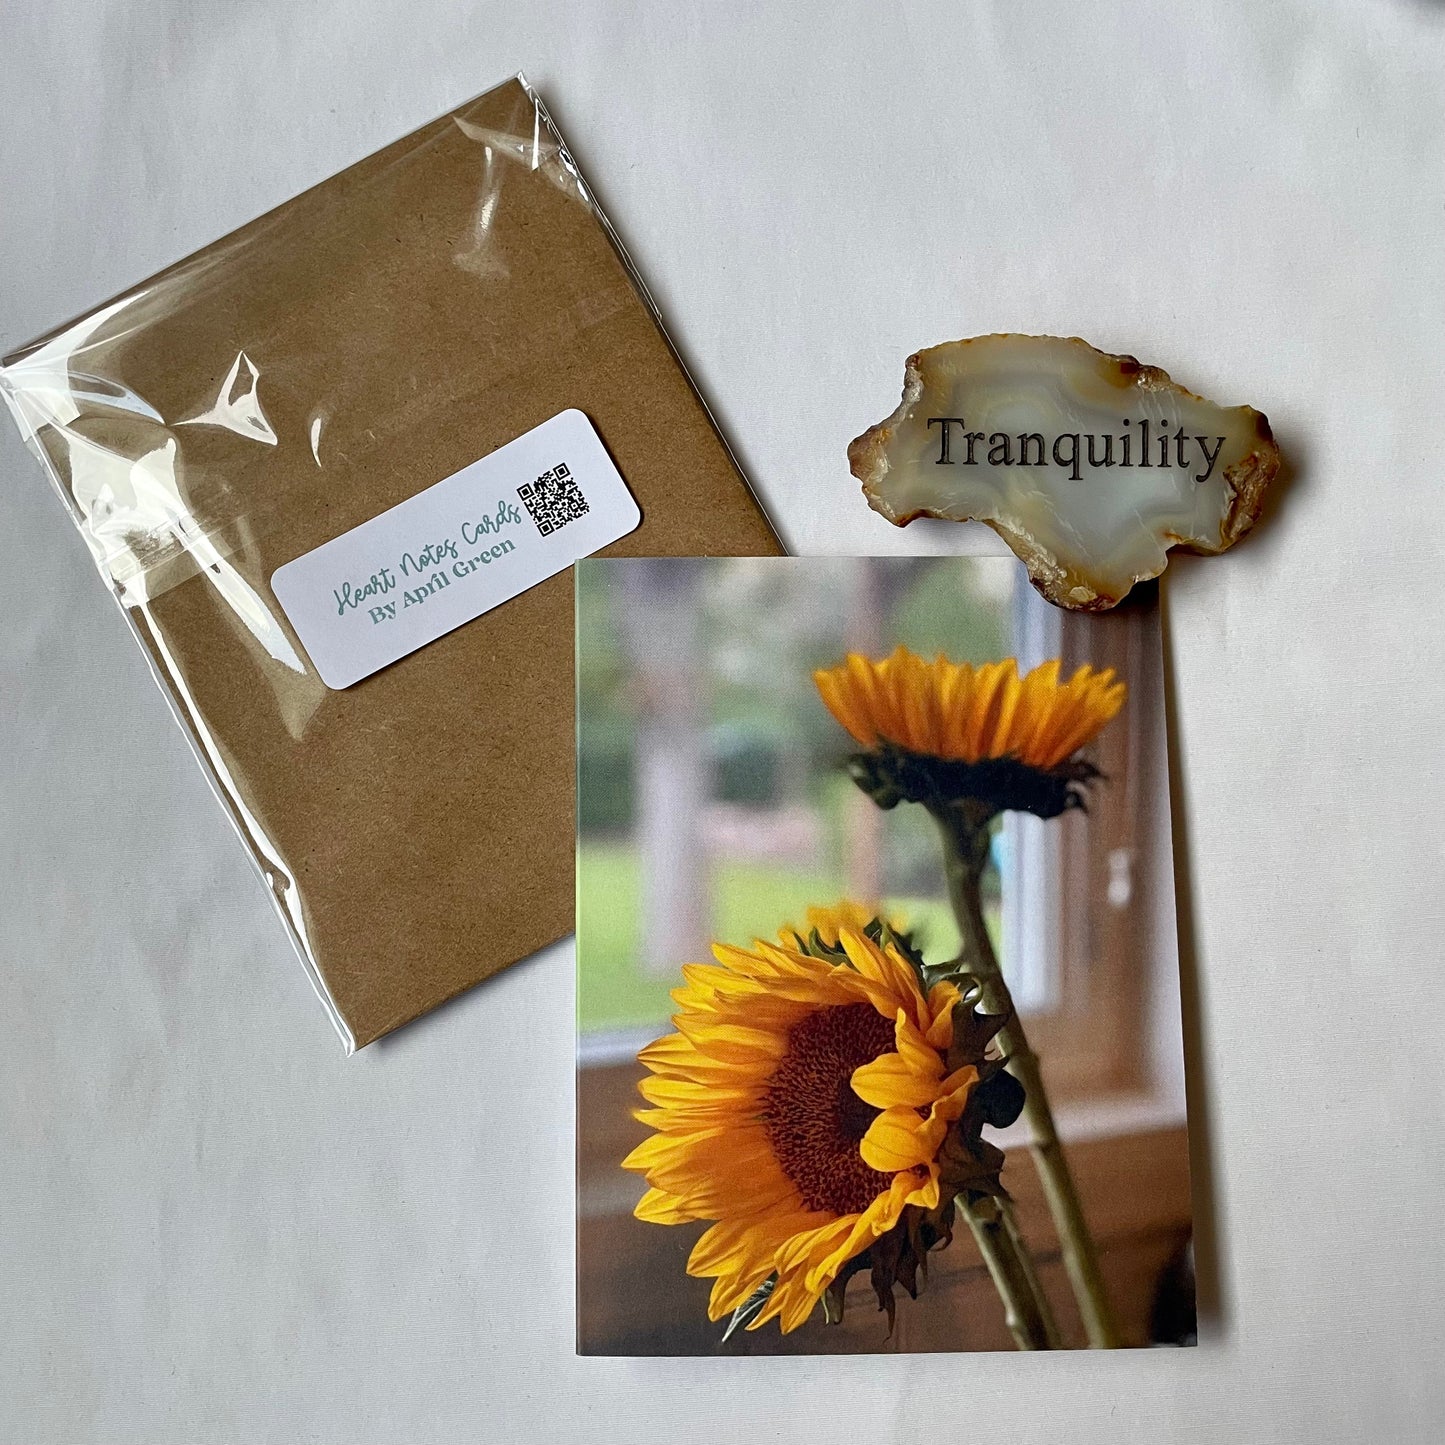 Sunny Days Sunflowers Original Photography Single Greeting Card with Kraft Envelope